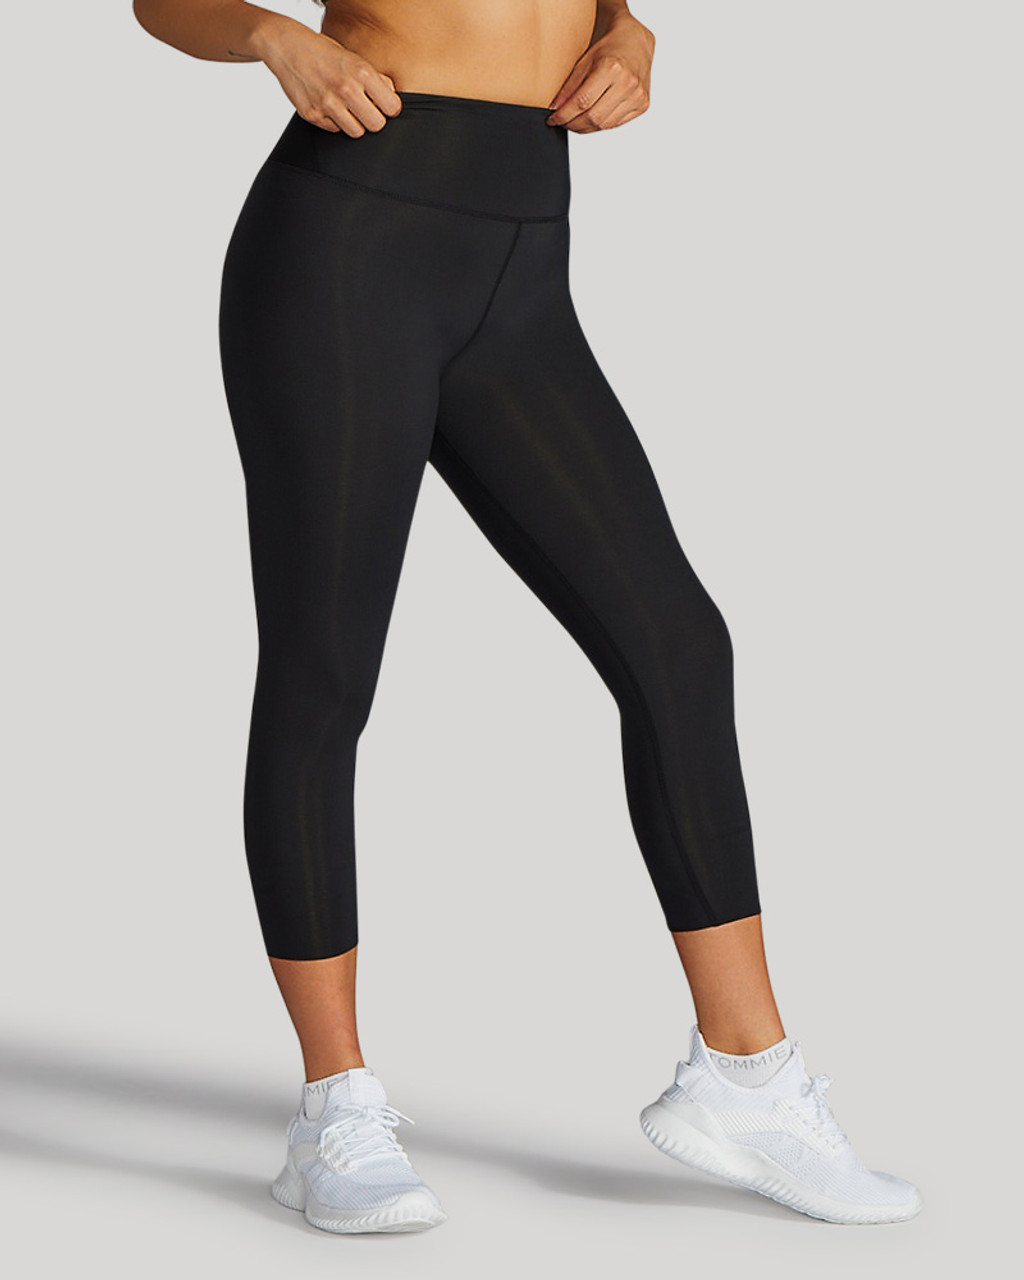 90 Degree By Reflex women's cropped mesh panel workout leggings S